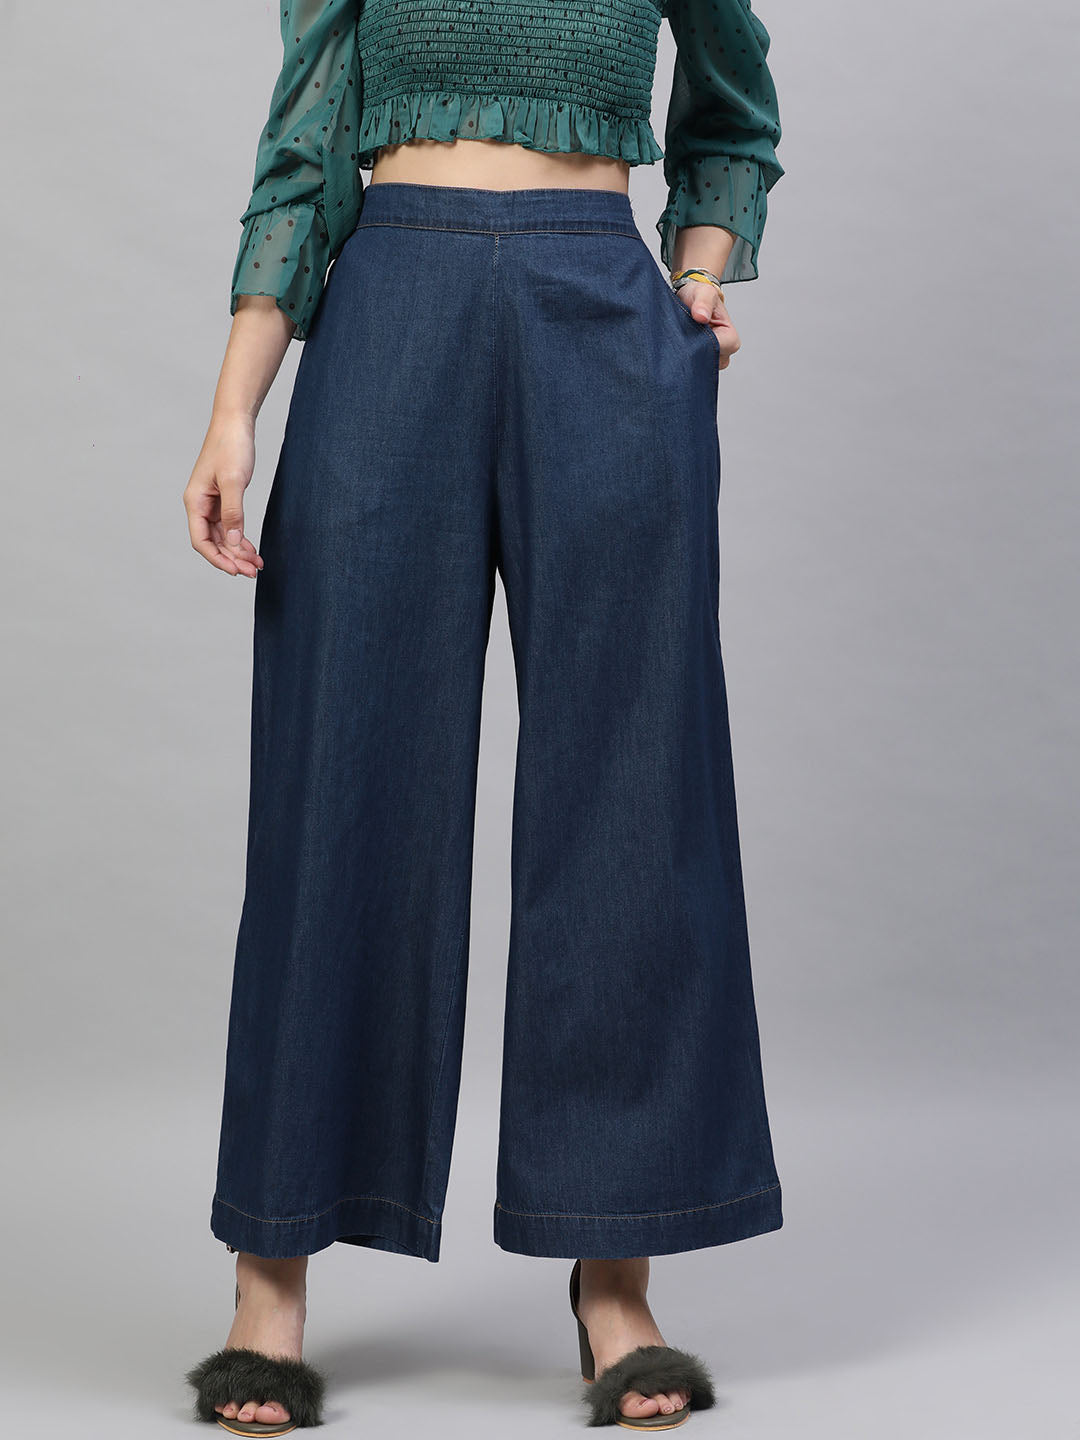 Buy Blue Crinkle Parallel Pants Online - Shop for W